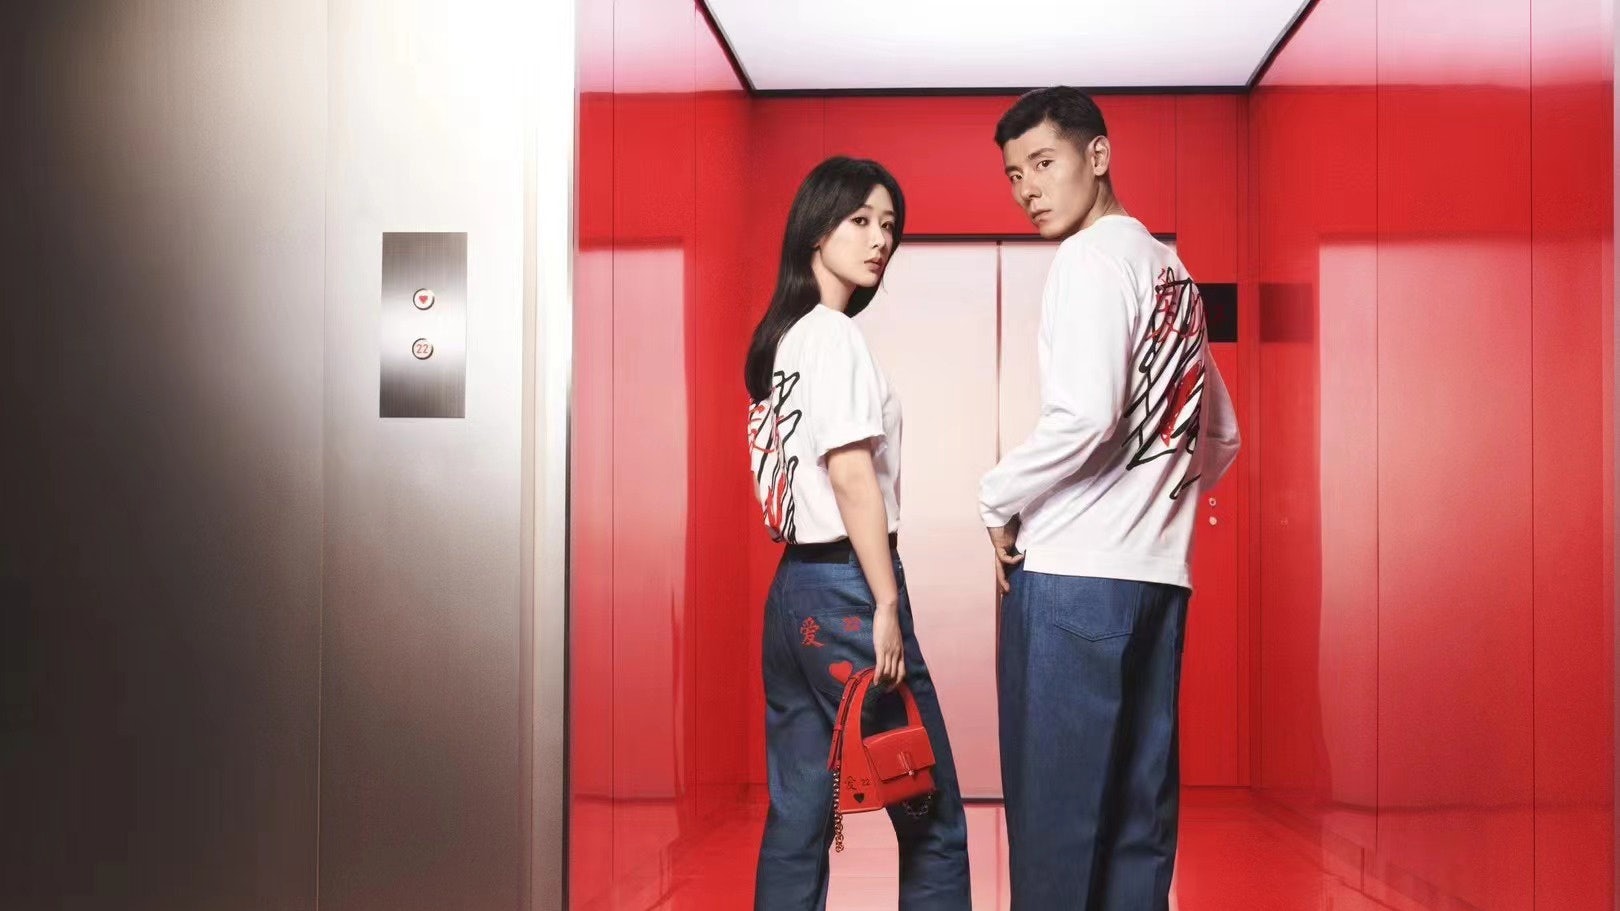 Actress Yang Zi and actor Jiang Qiming explore creative styling options by mixing and matching Qixi garments. Photo: Ferragamo